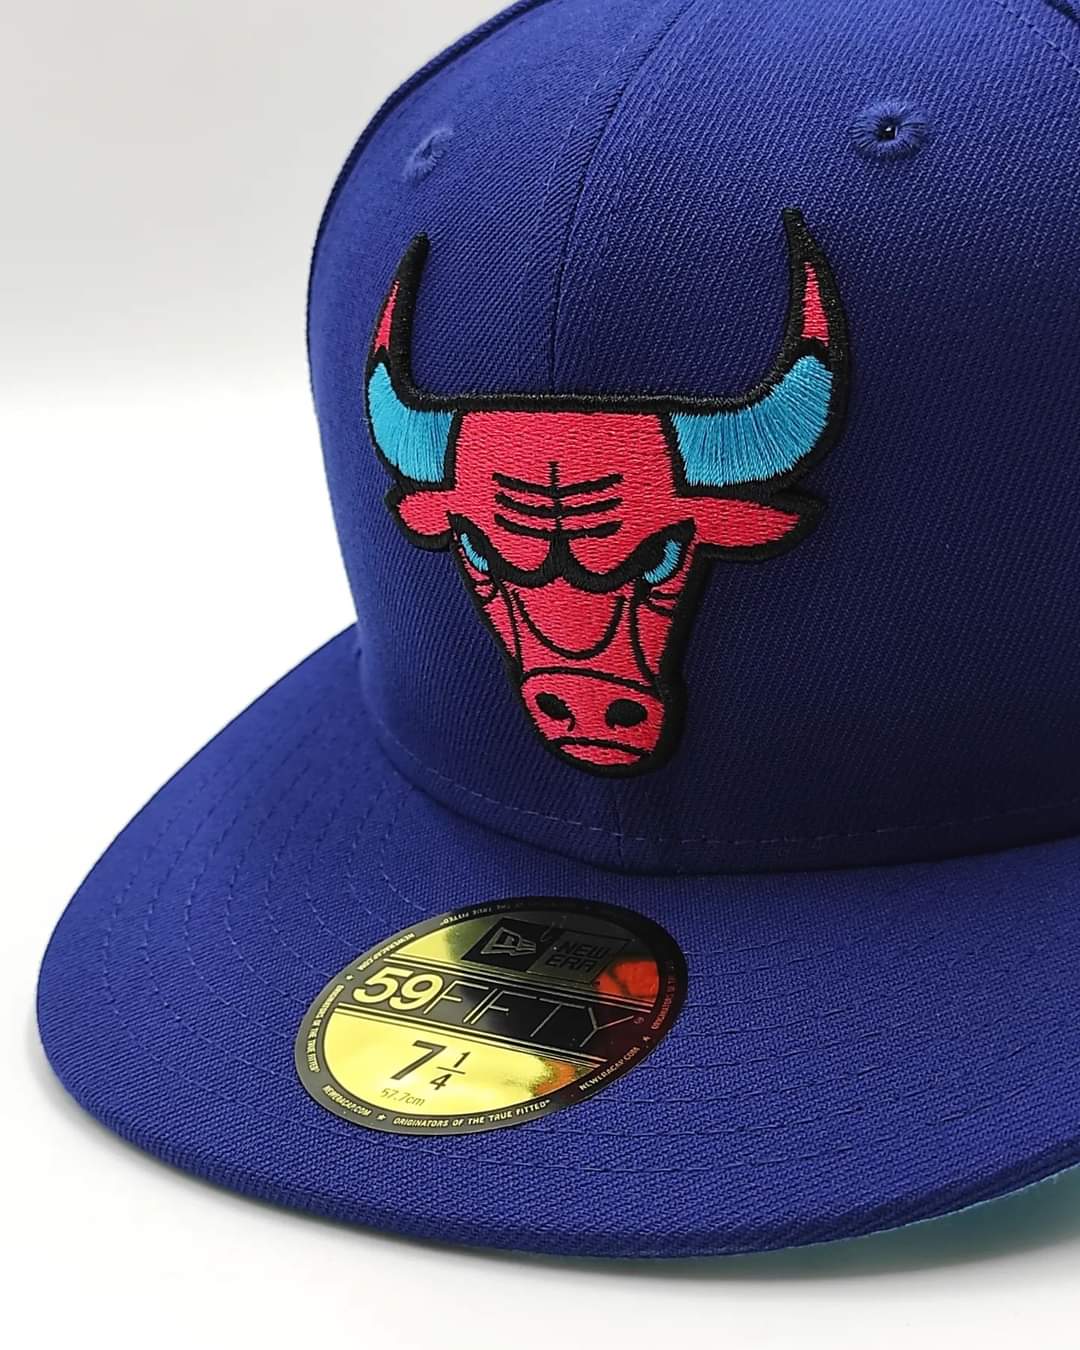 New Era 59fifty Interestelar Helly Chicago bulls hat - royal